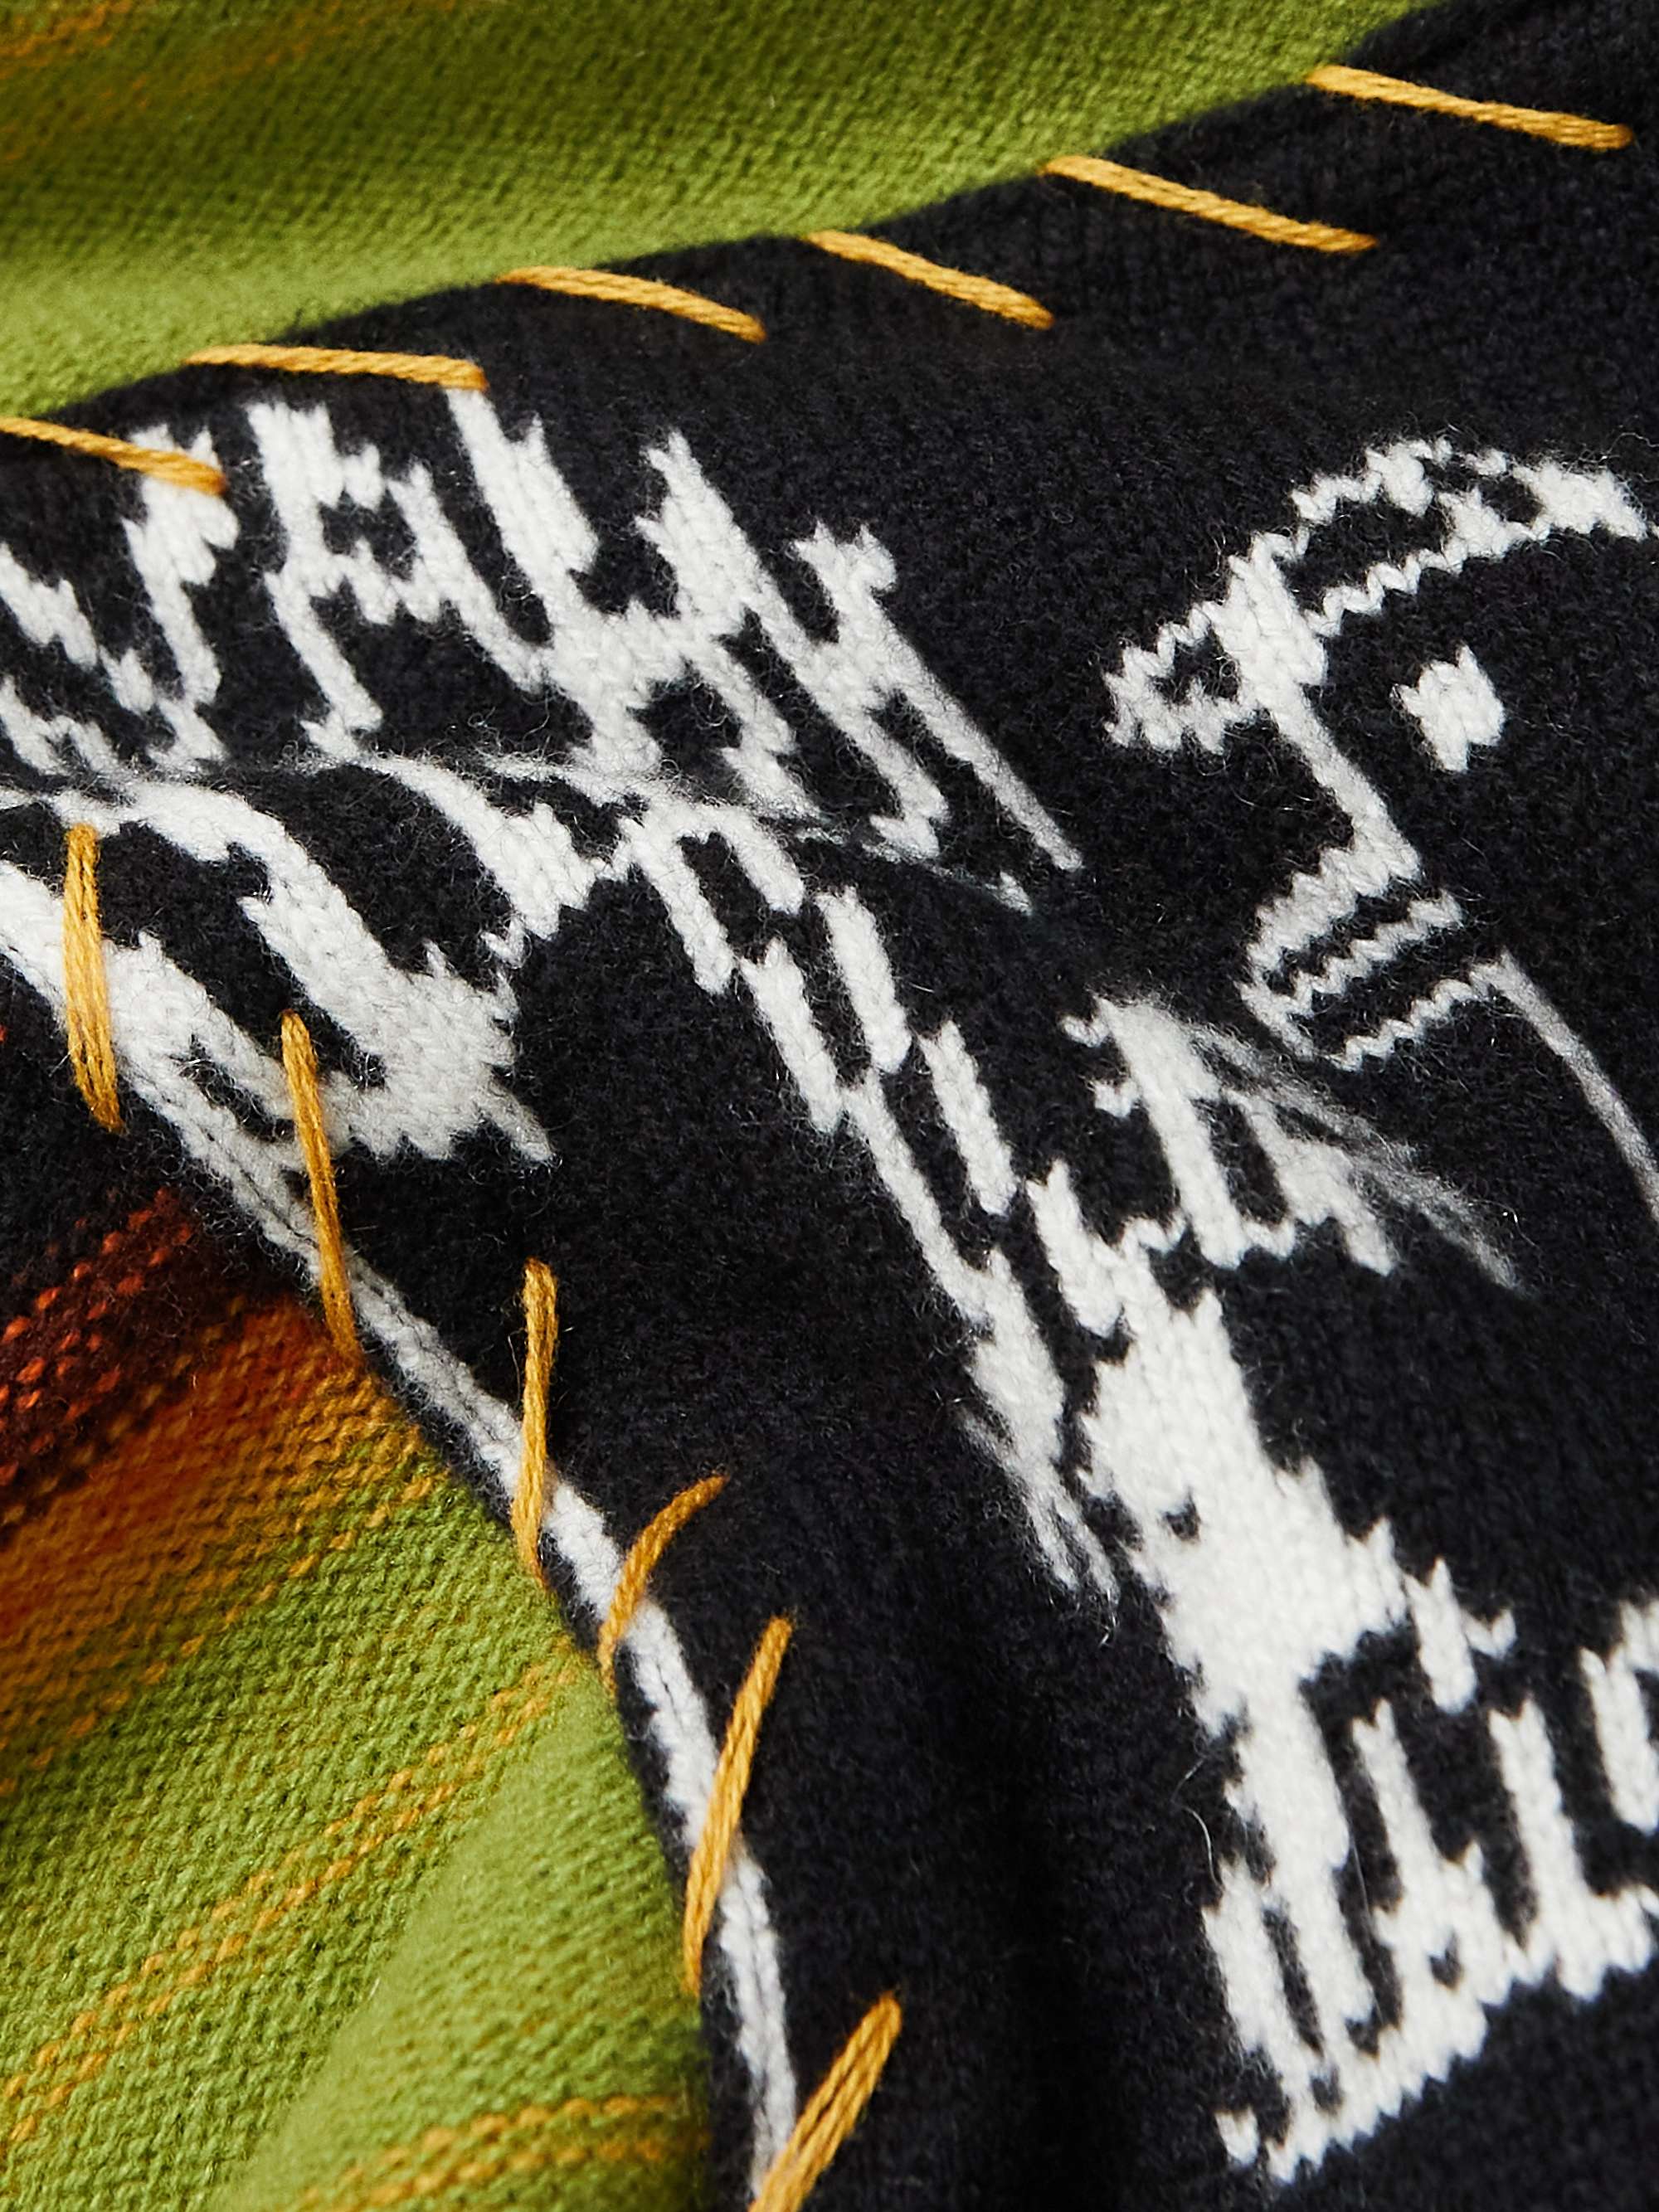 THE ELDER STATESMAN + Inner City Arts Striped Merino Wool and Cashmere-Blend Sweater